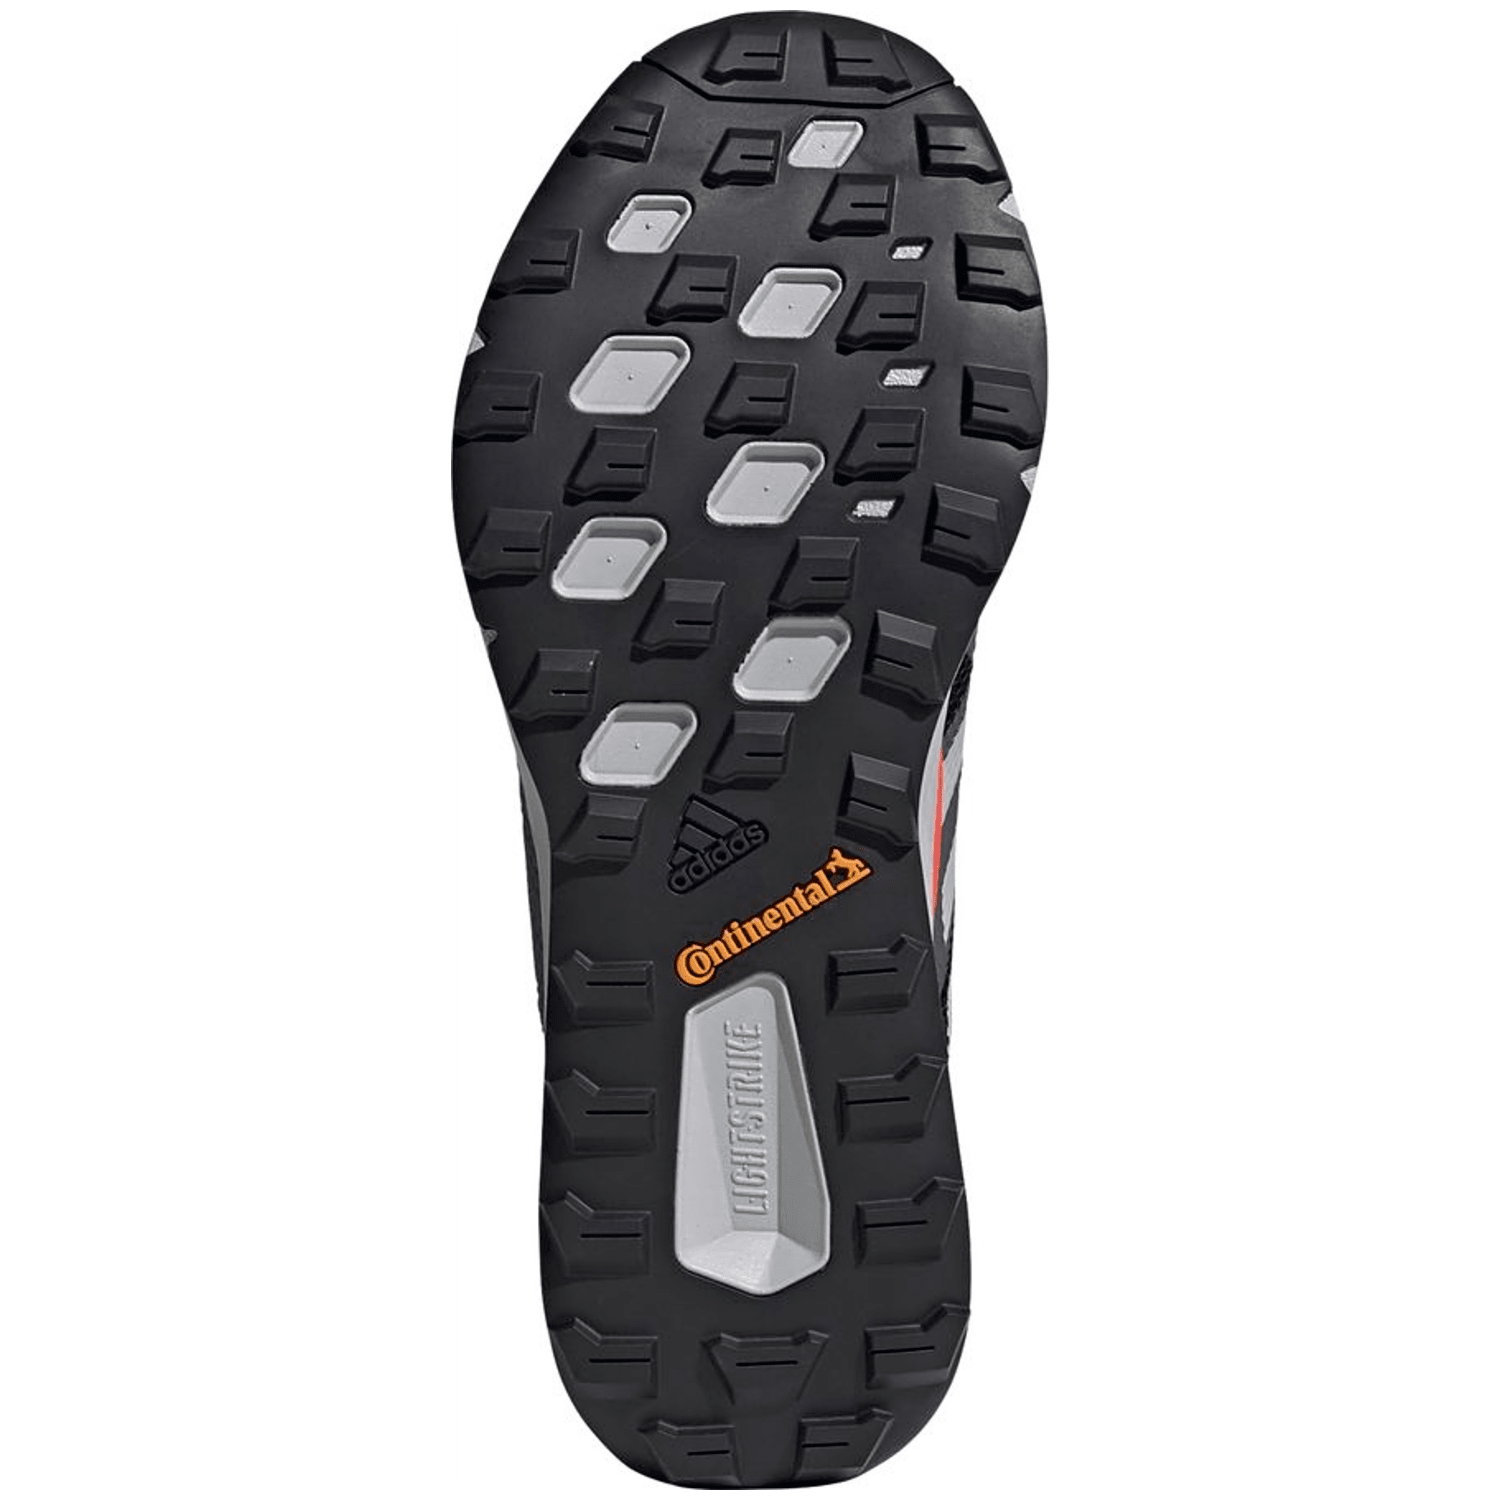 Adidas TERREX Two GORE-TEX Trailrunning-Schuh Herren